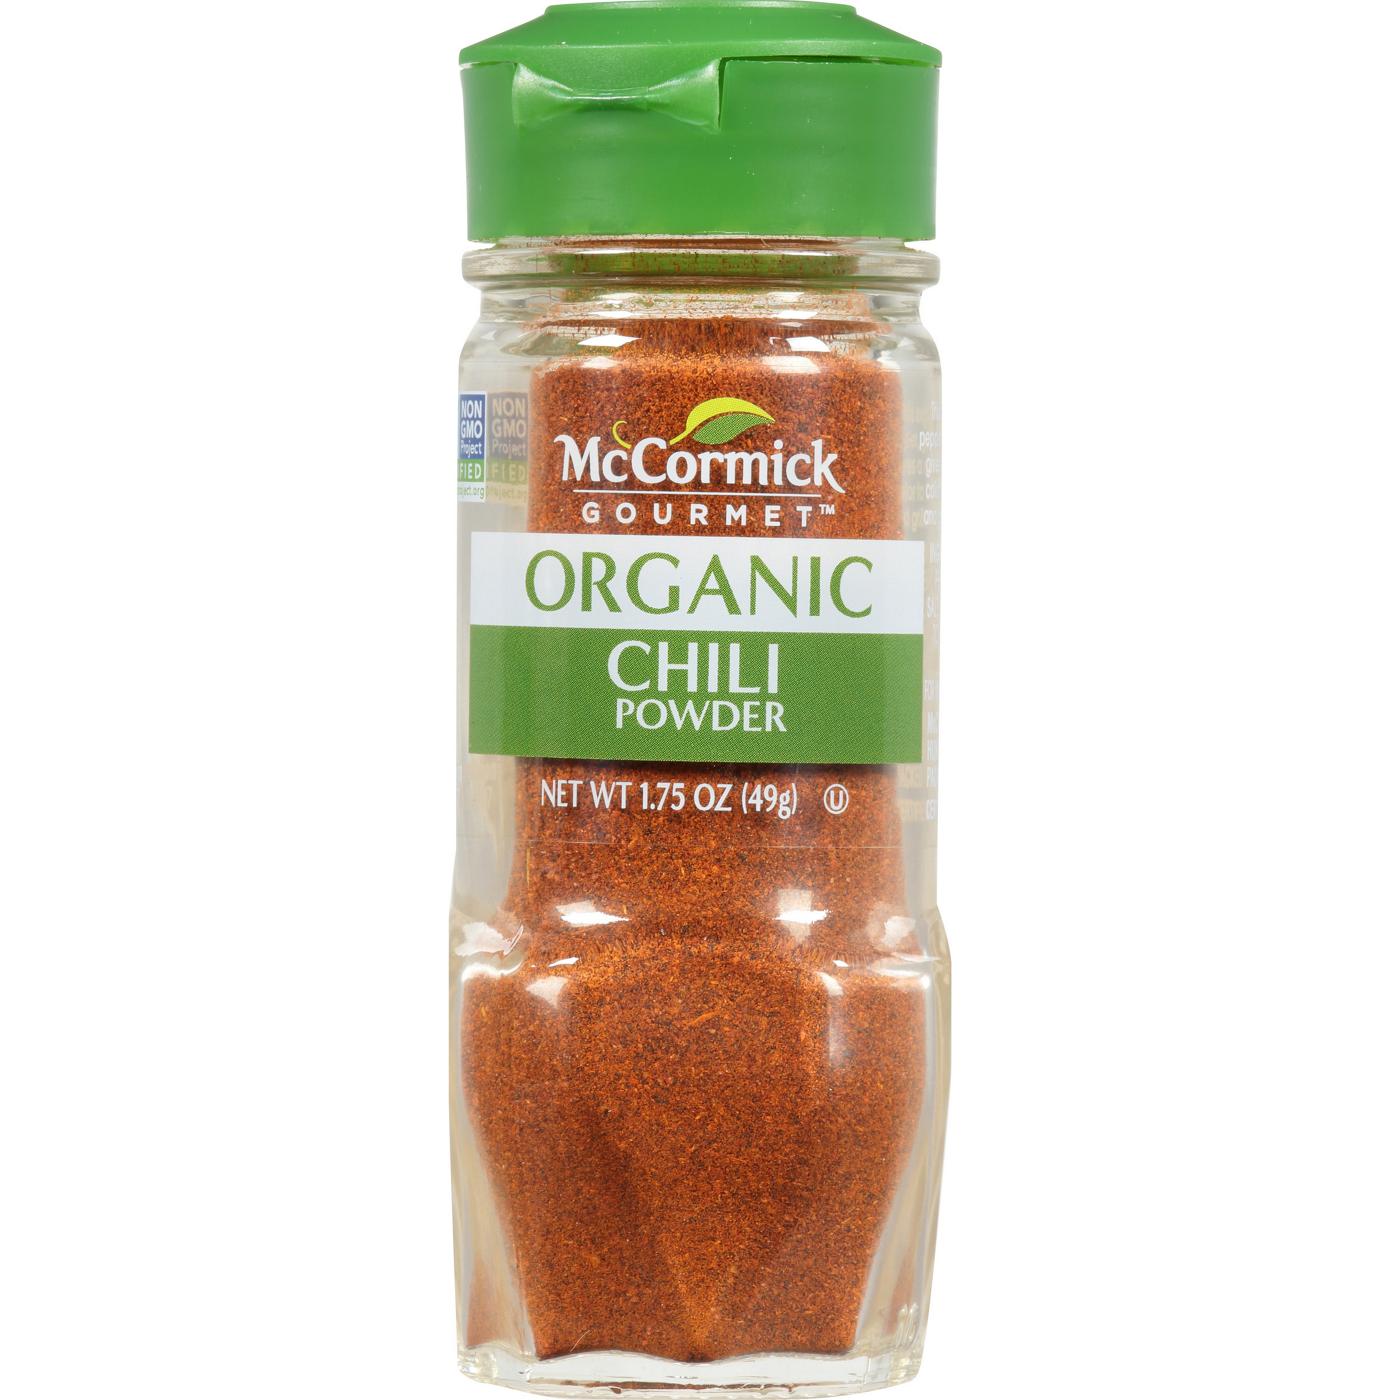 McCormick Gourmet Organic Chili Powder; image 1 of 3